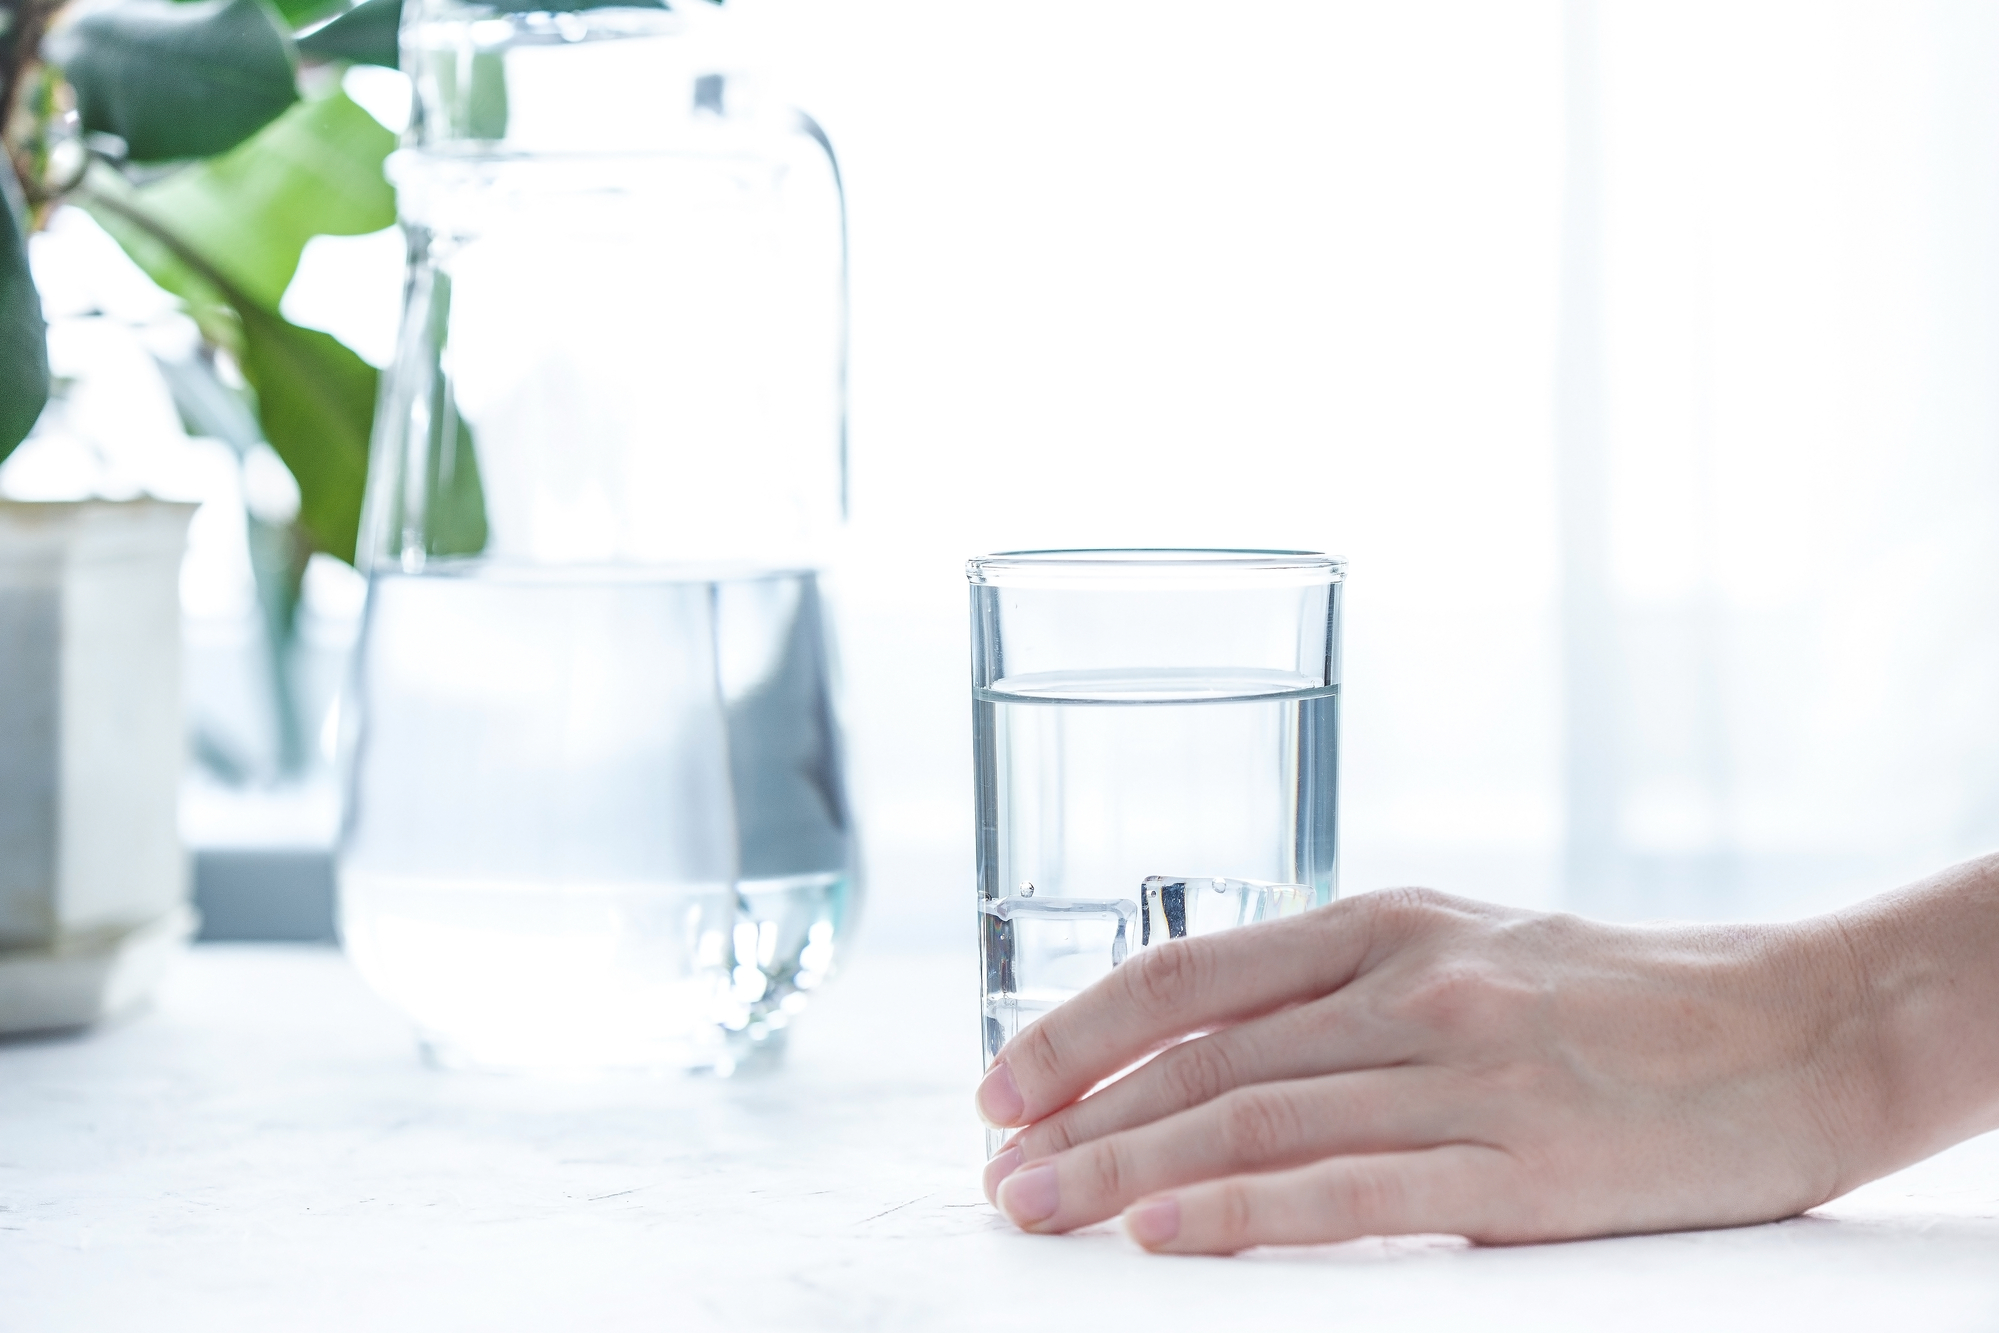 água gelada ou natural mata mais a sede?